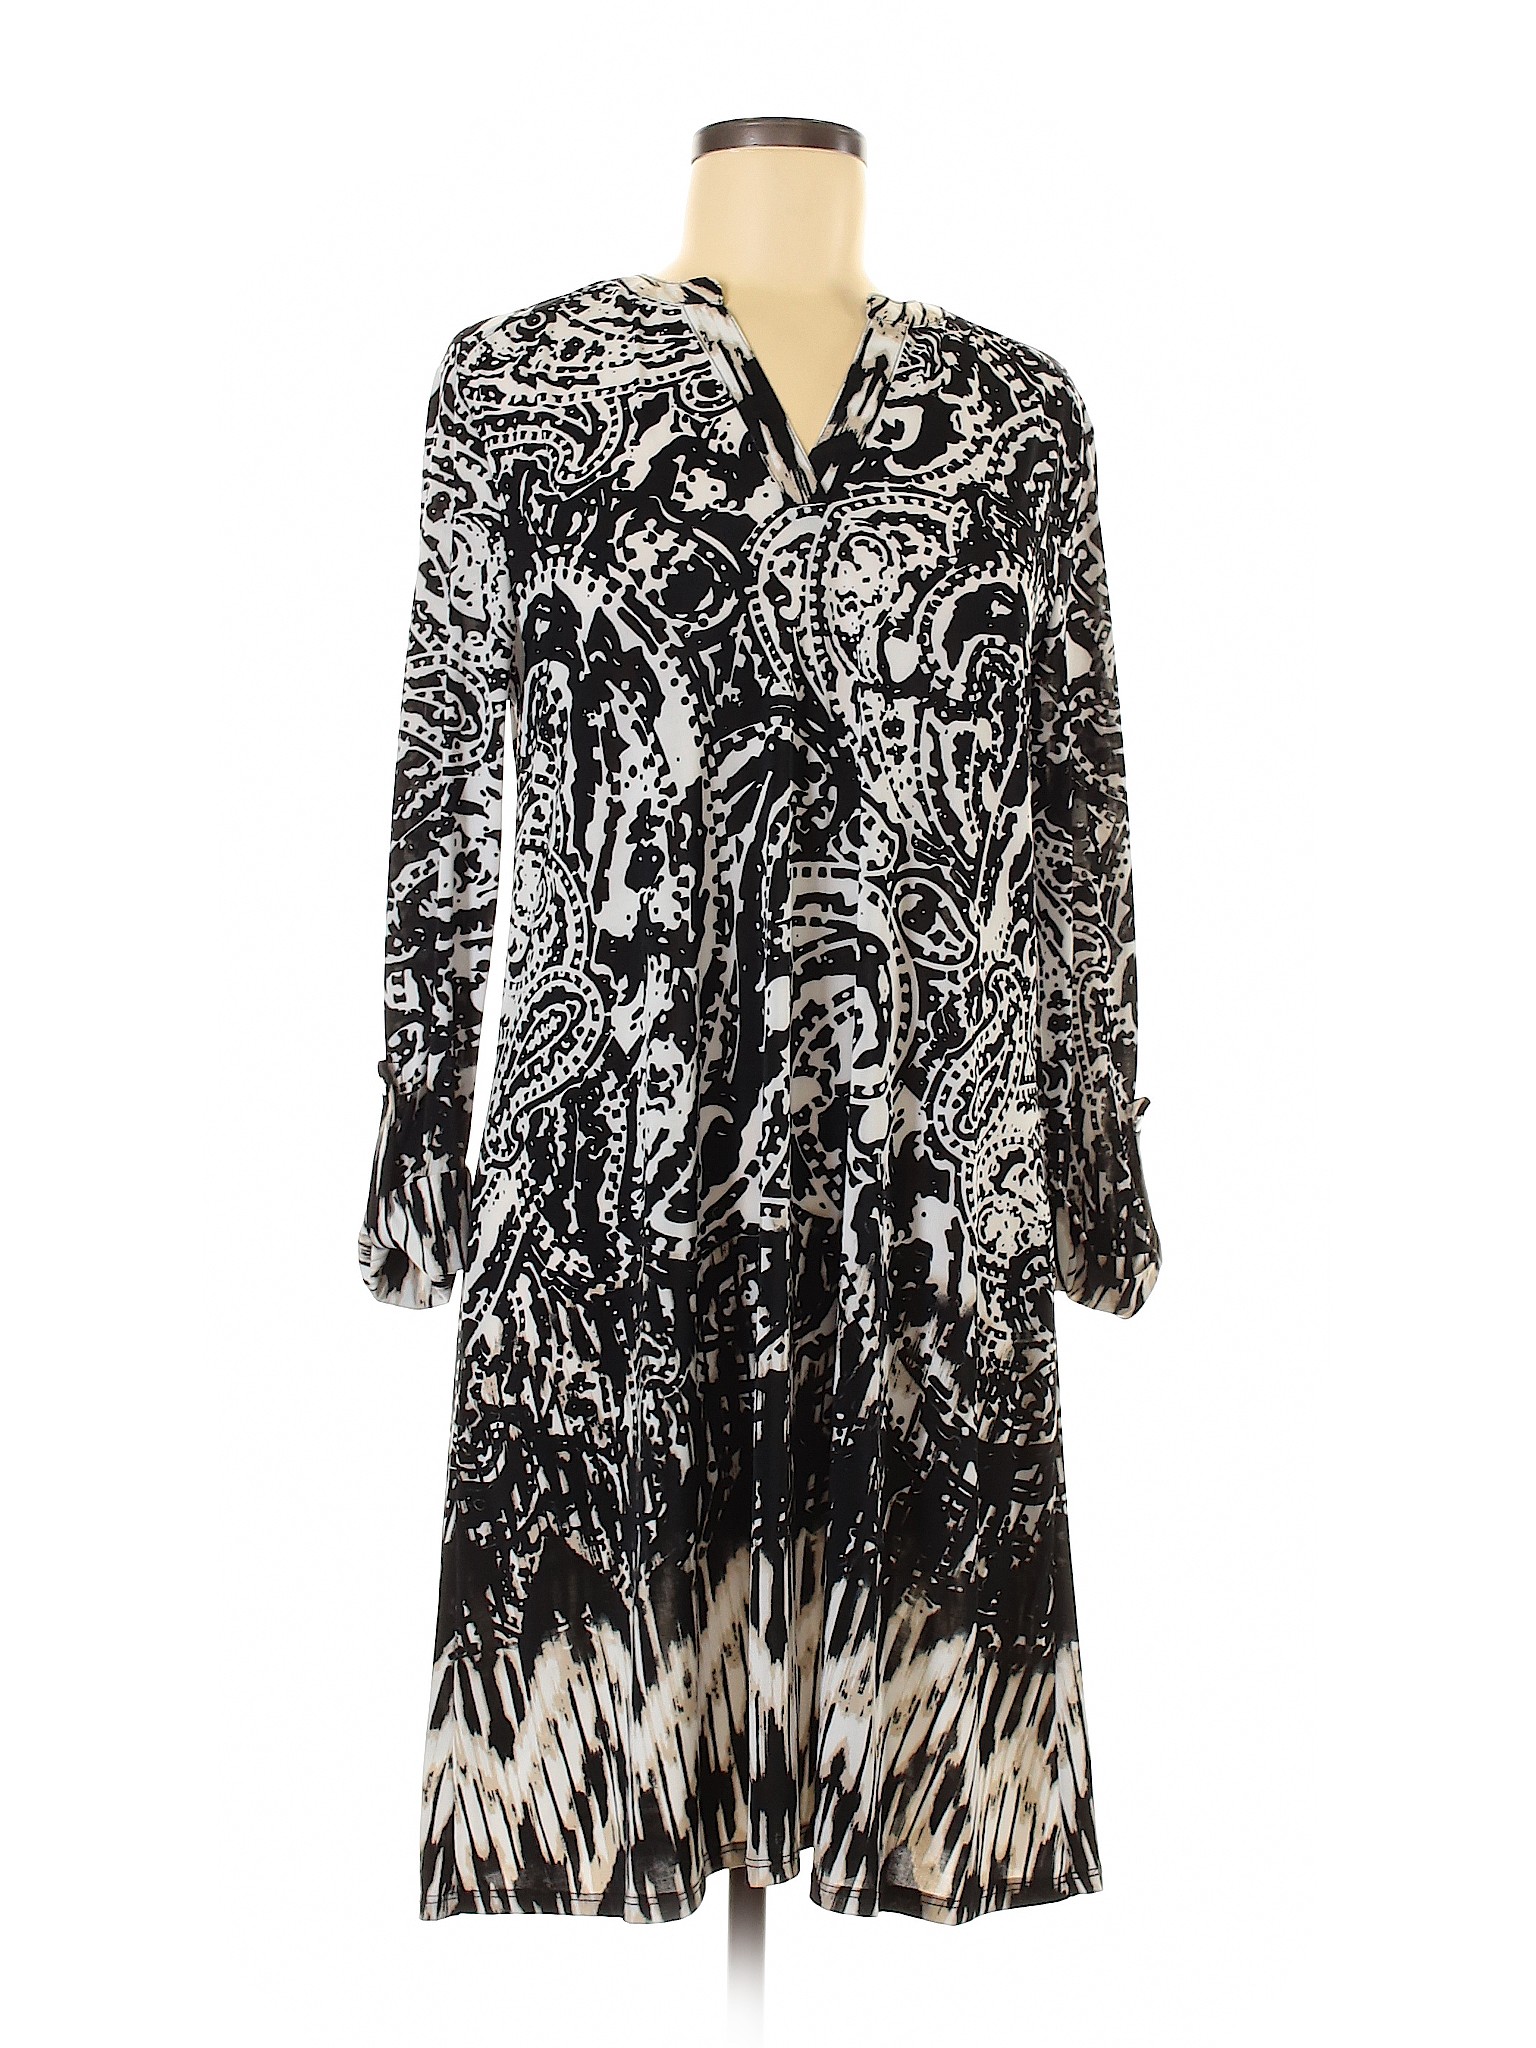 New Directions Women Black Casual Dress S | eBay